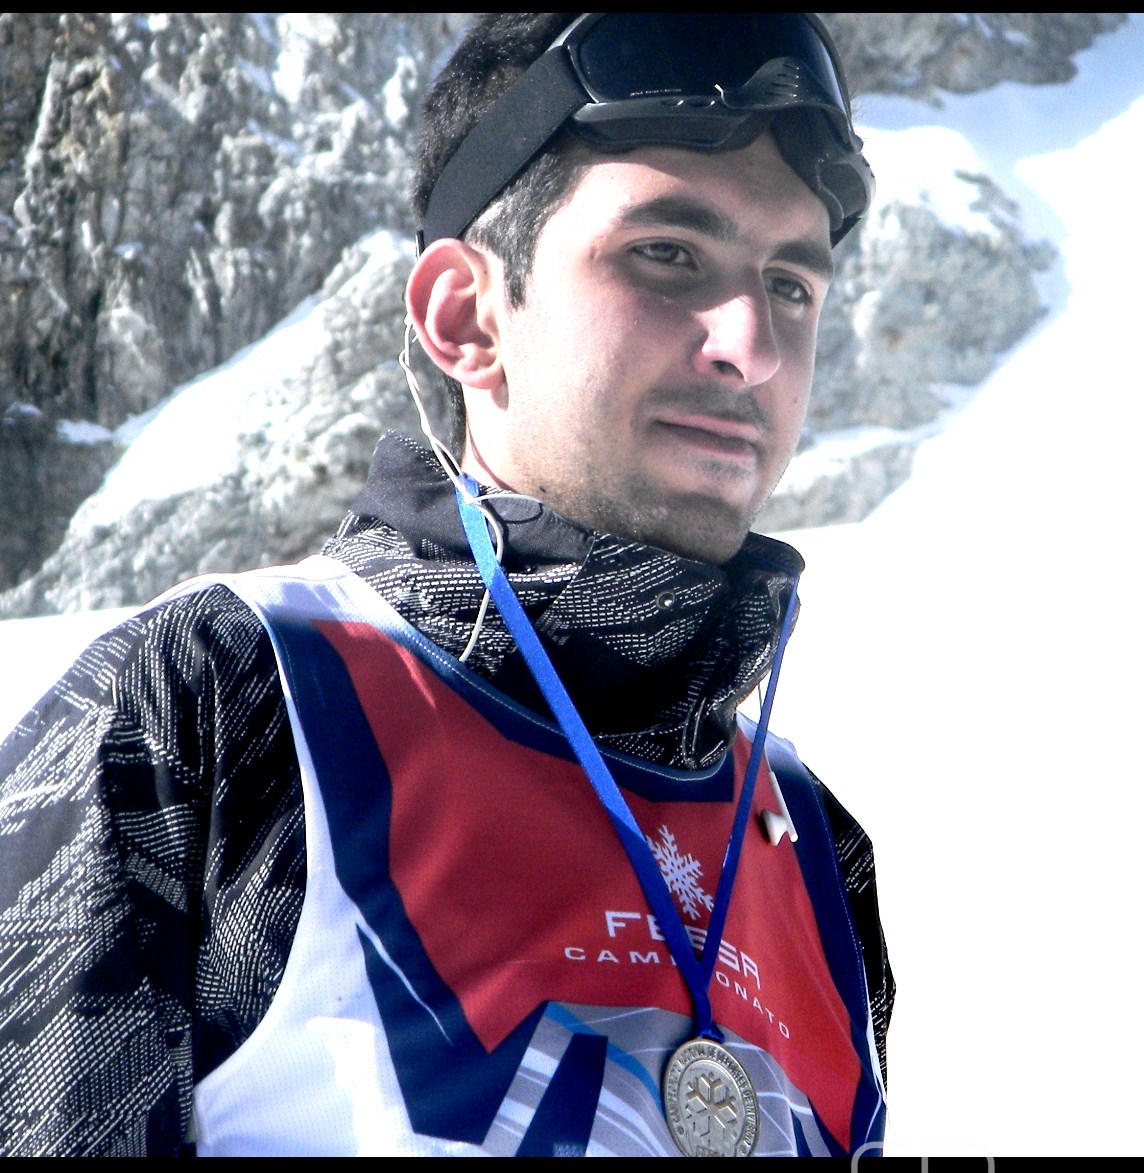 campeonato de ski 2011, Chacaltaya